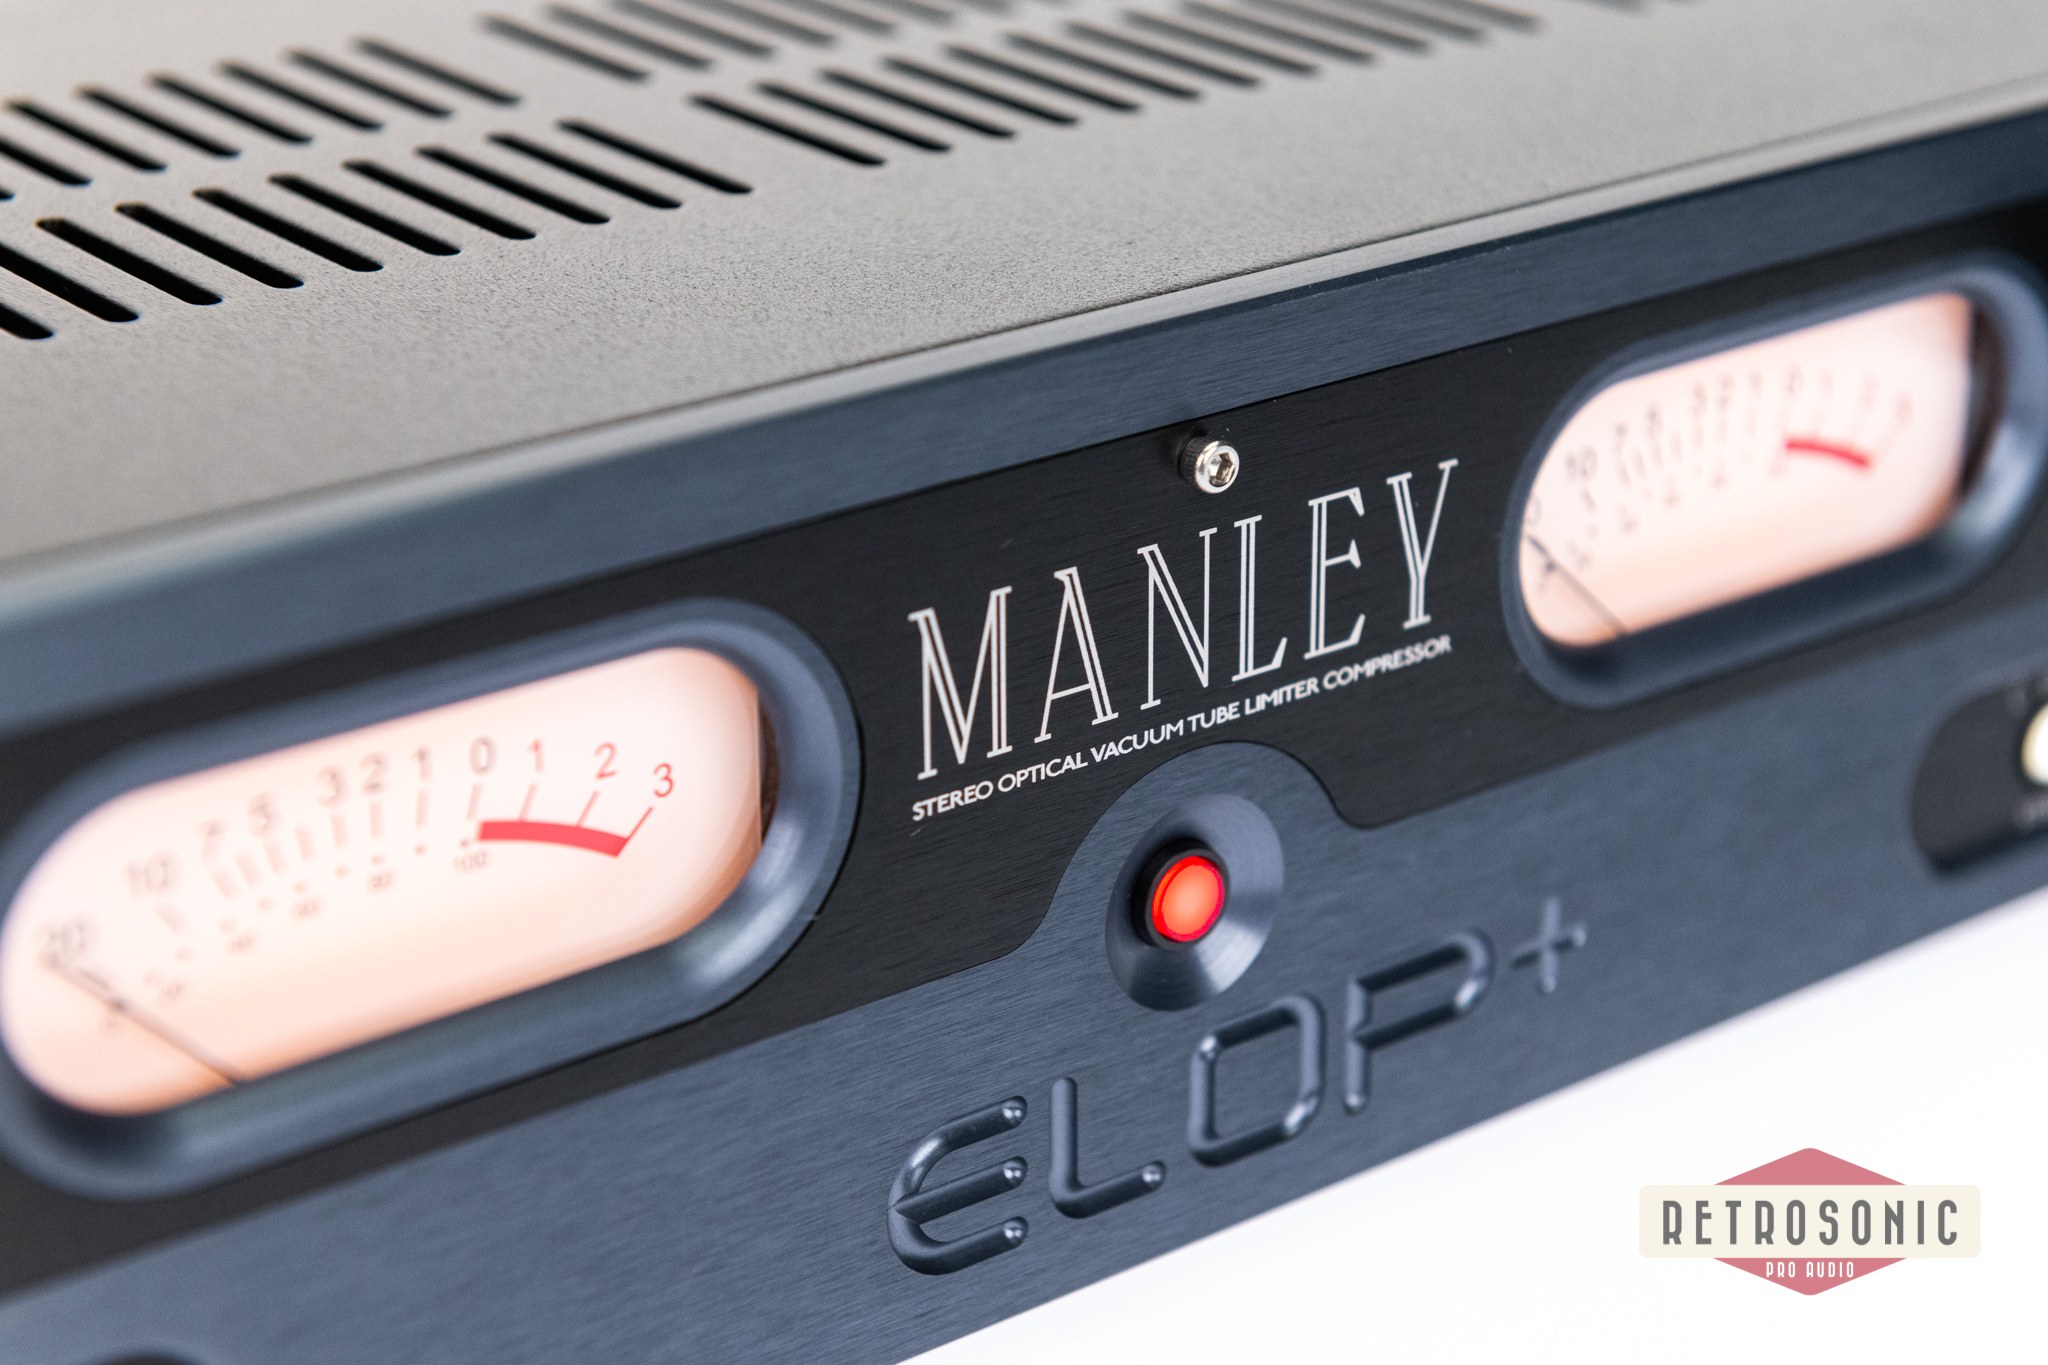 Manley ELOP+ Stereo Limiter Compressor